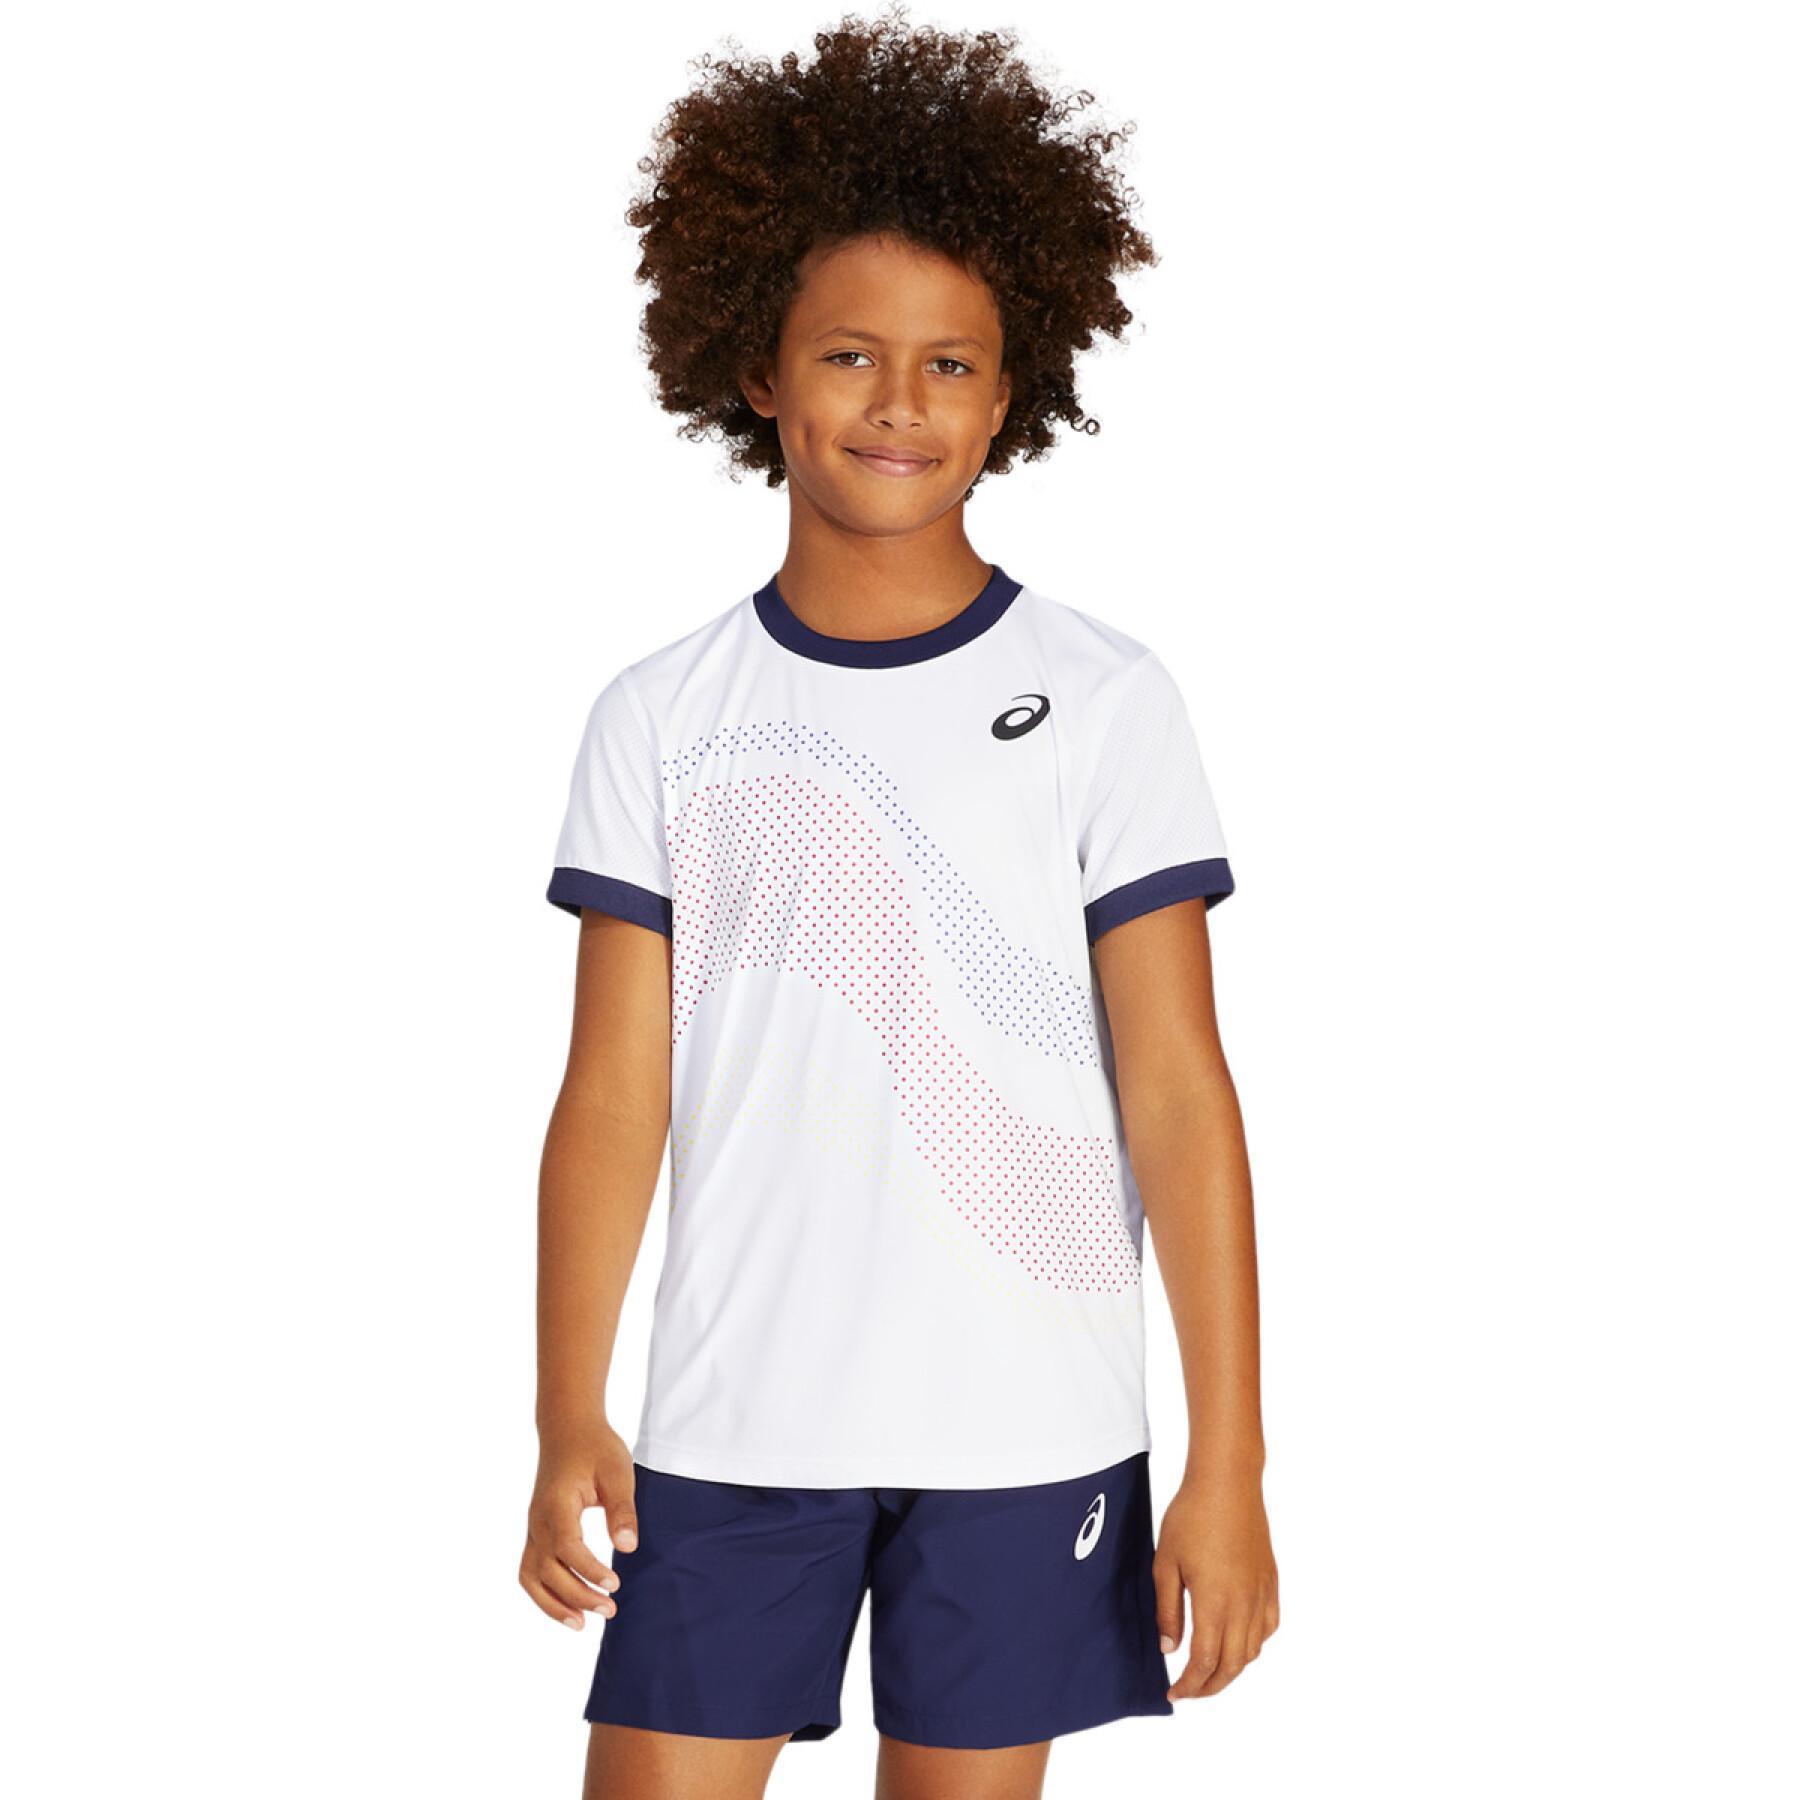 T-shirt kind Asics Tennis B Gpx